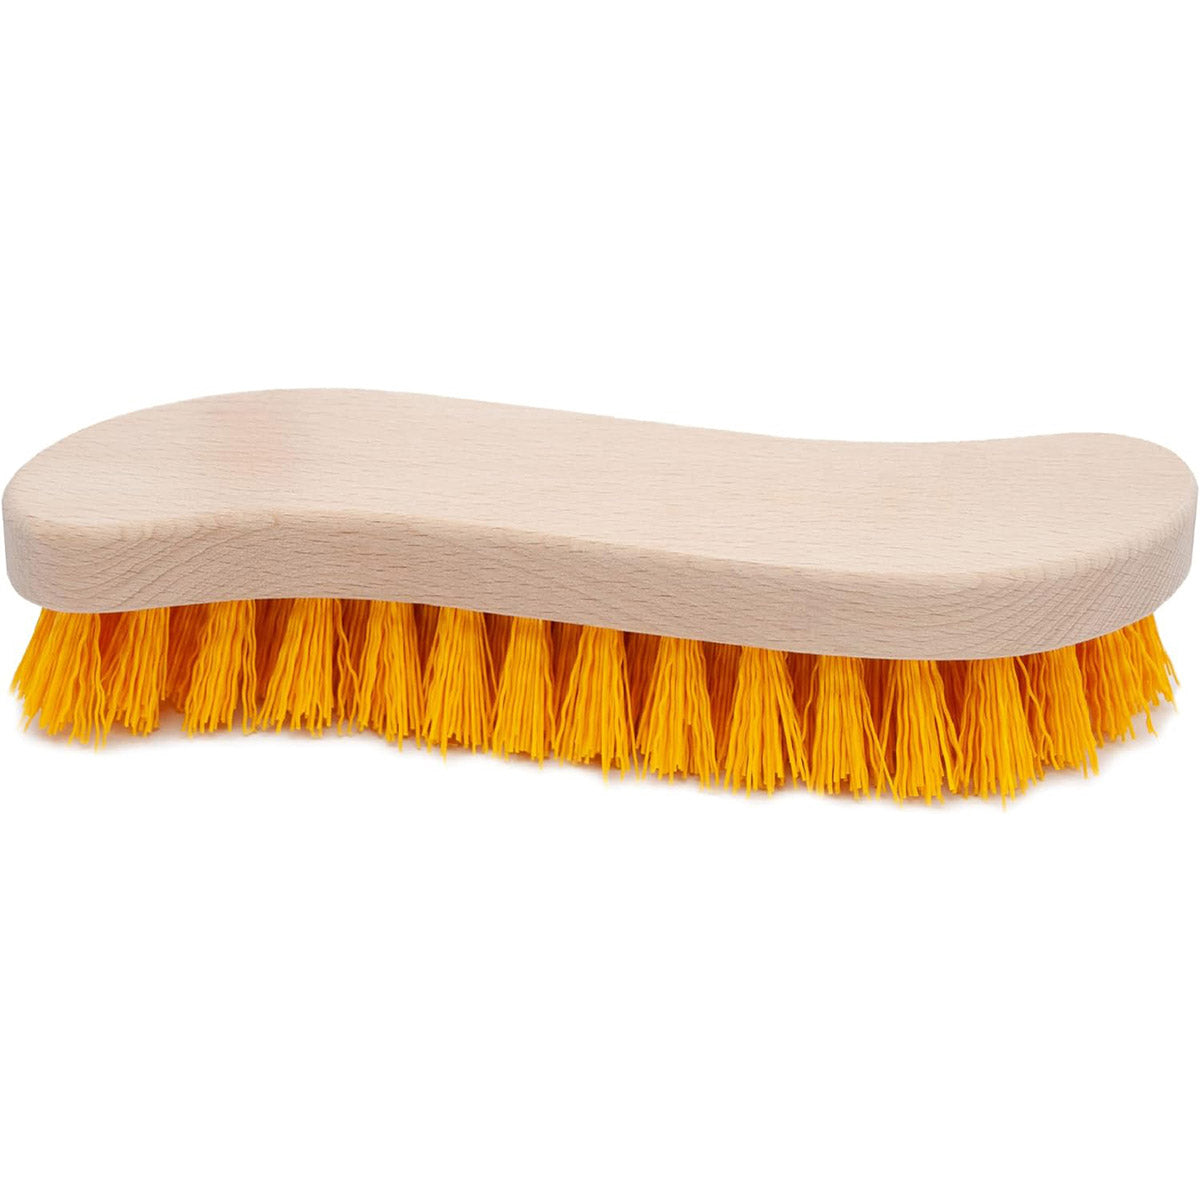 Scrub Brush - Stiff Bristle Brush for Deep Cleaning